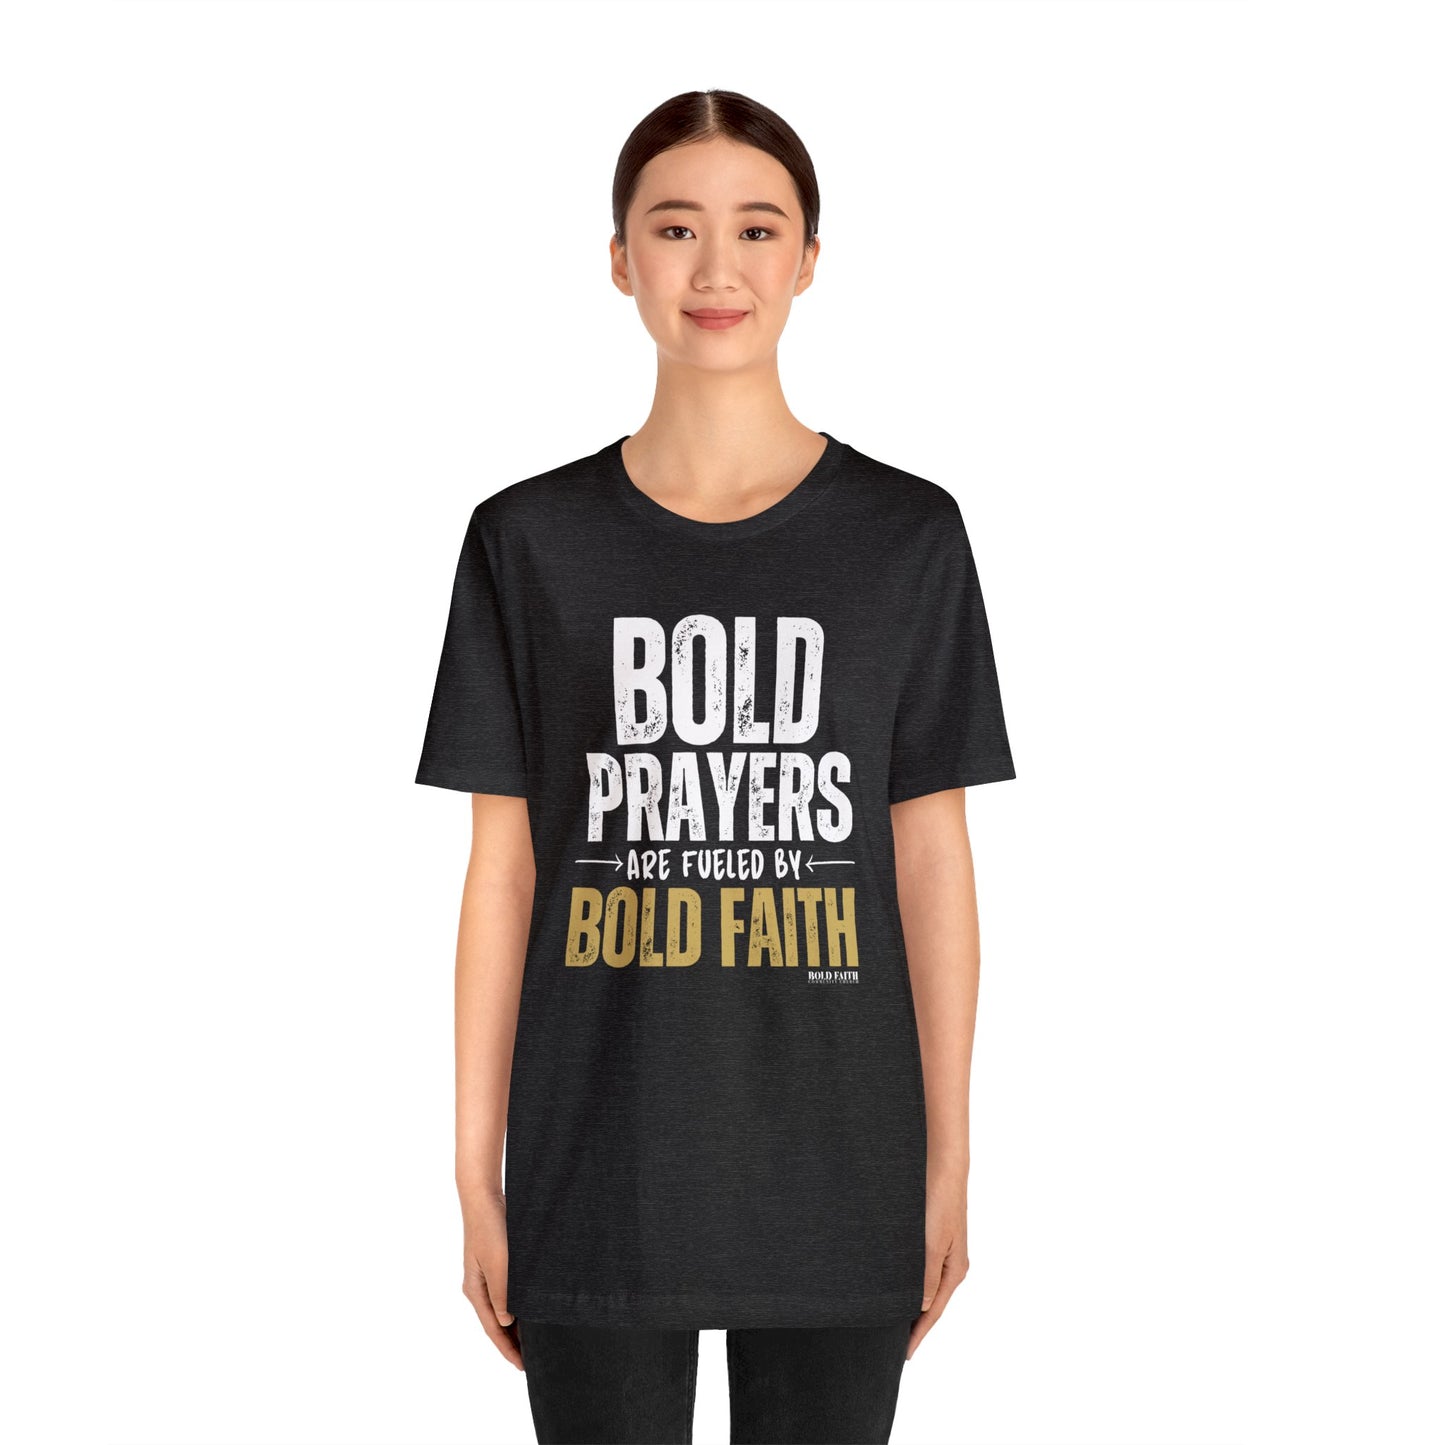 Bold Prayers Are Fueled by Bold Faith Jersey Short Sleeve Tee